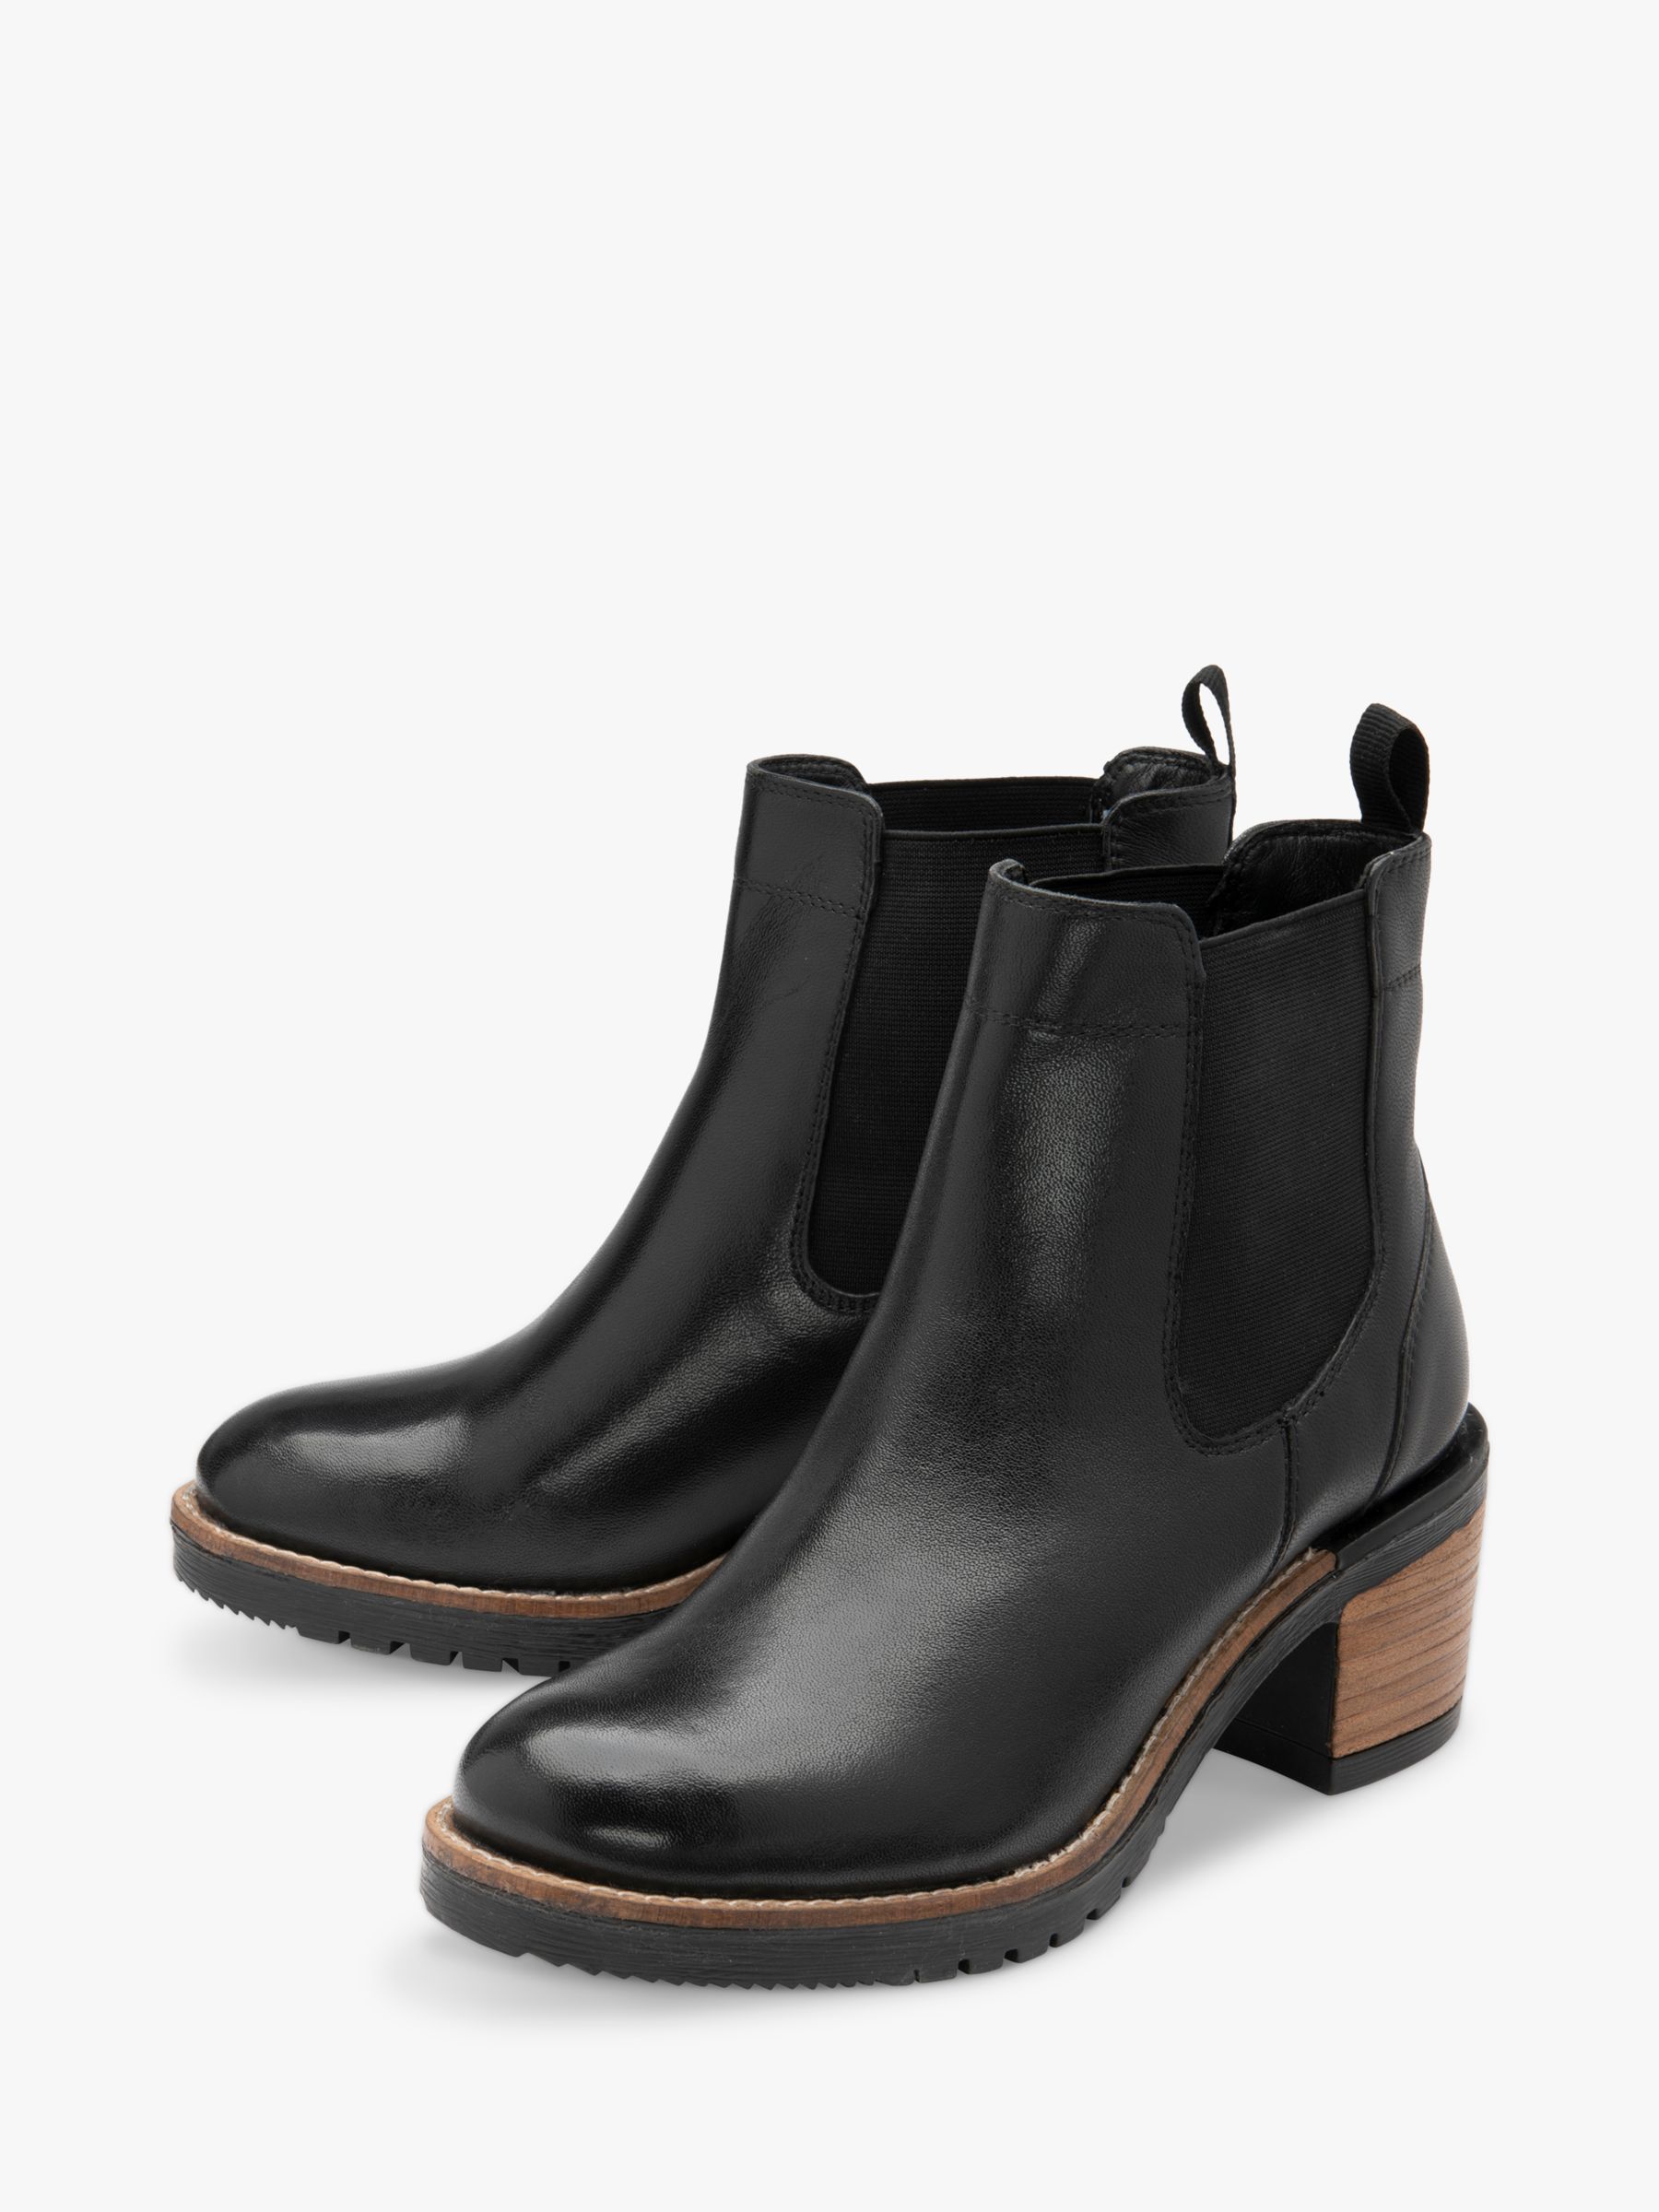 Ravel Bray Leather Block Heel Ankle Boots, Black, 3